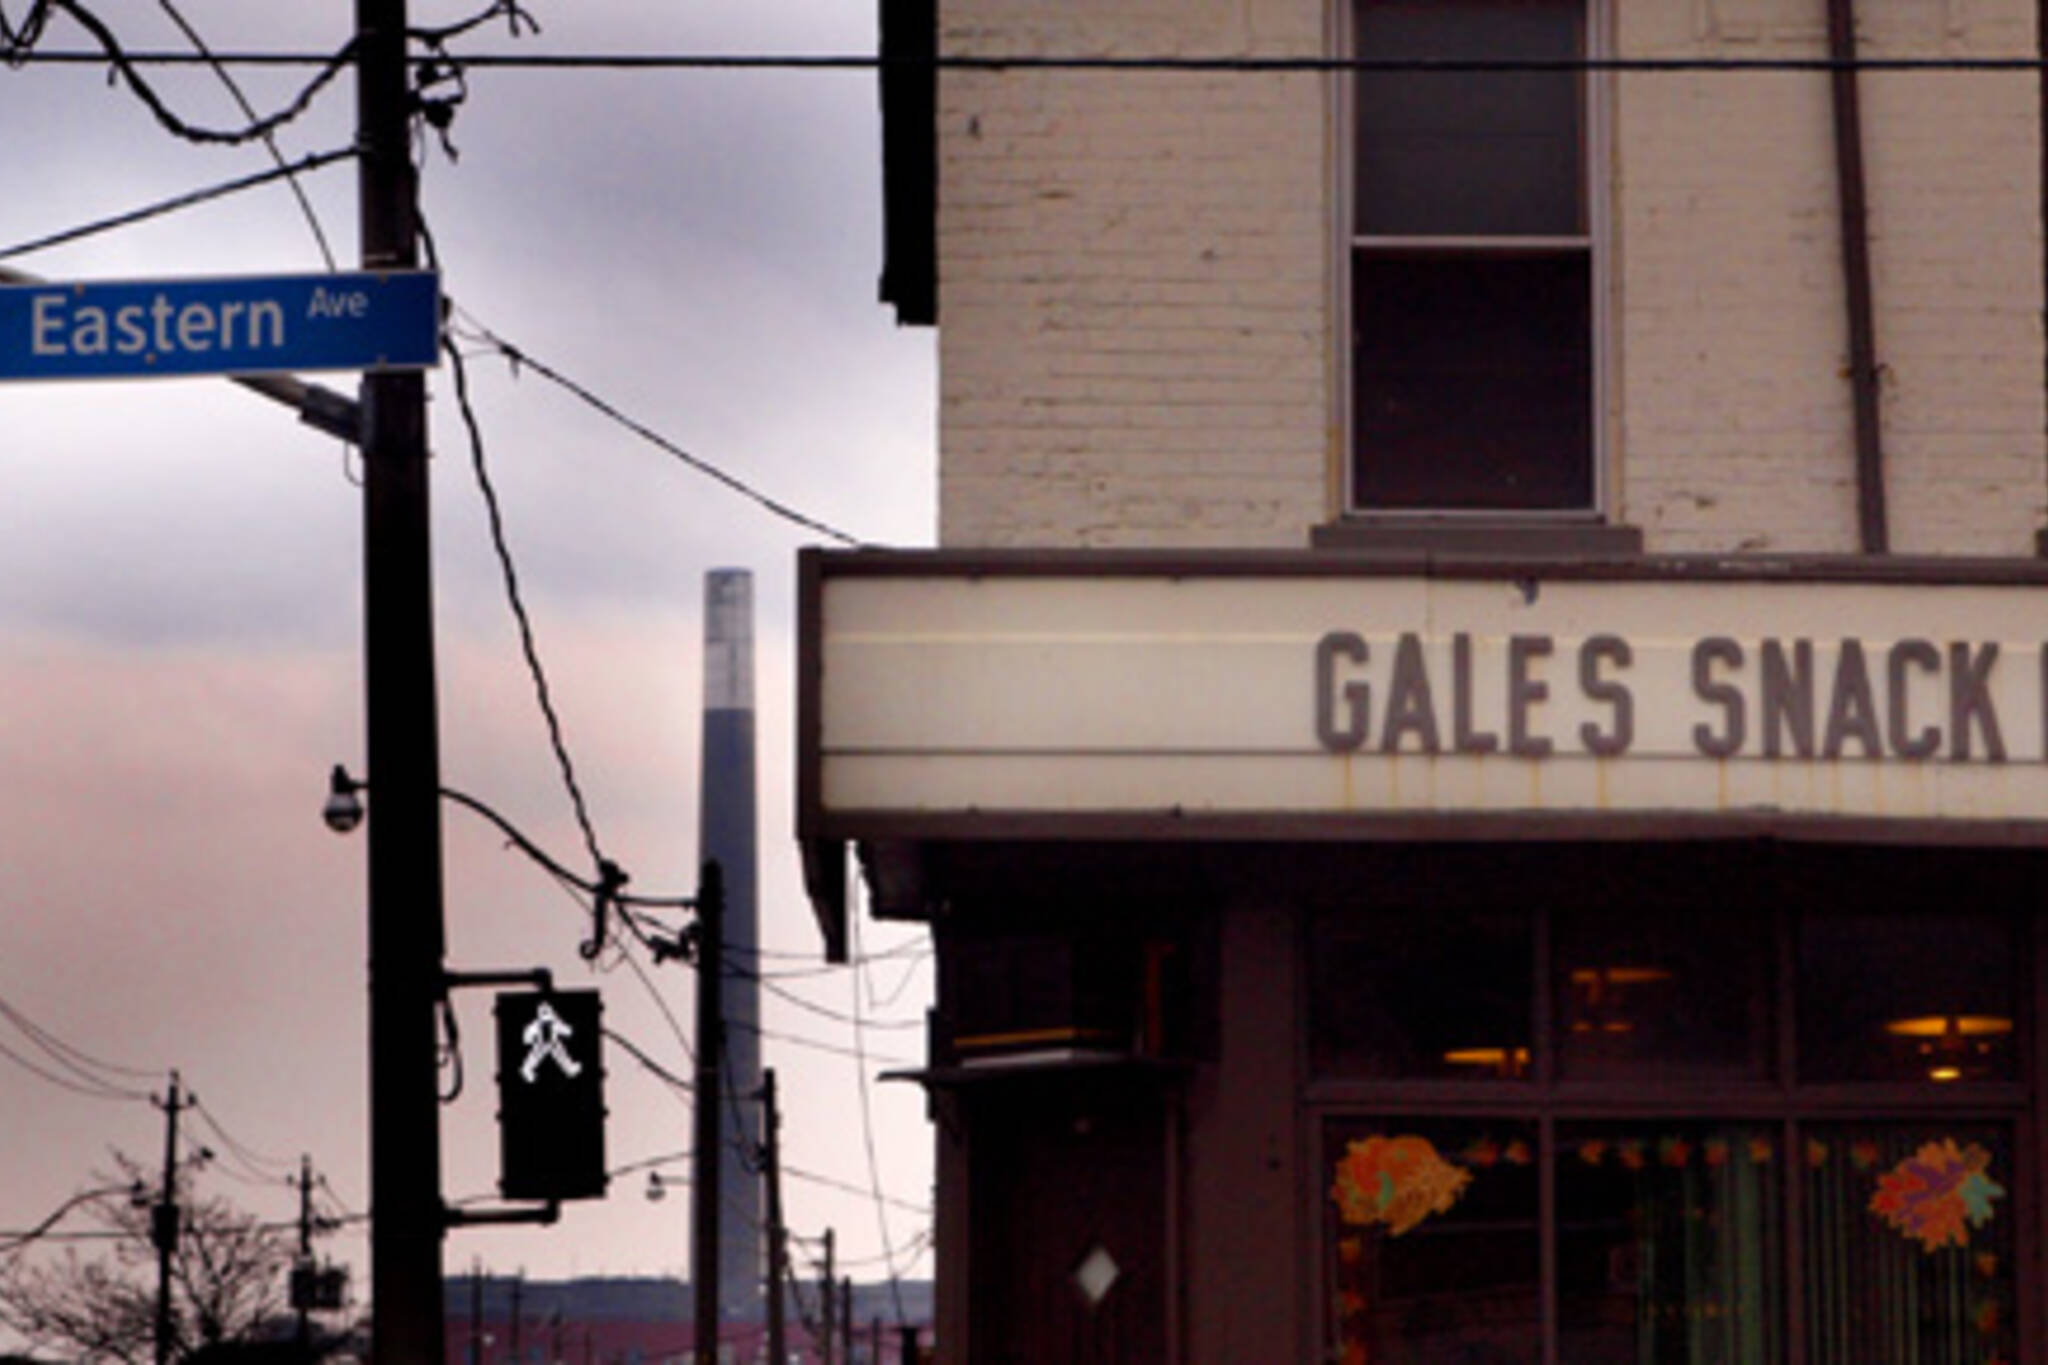 Gale's Snack Bar, an Eastern Avenue landmark